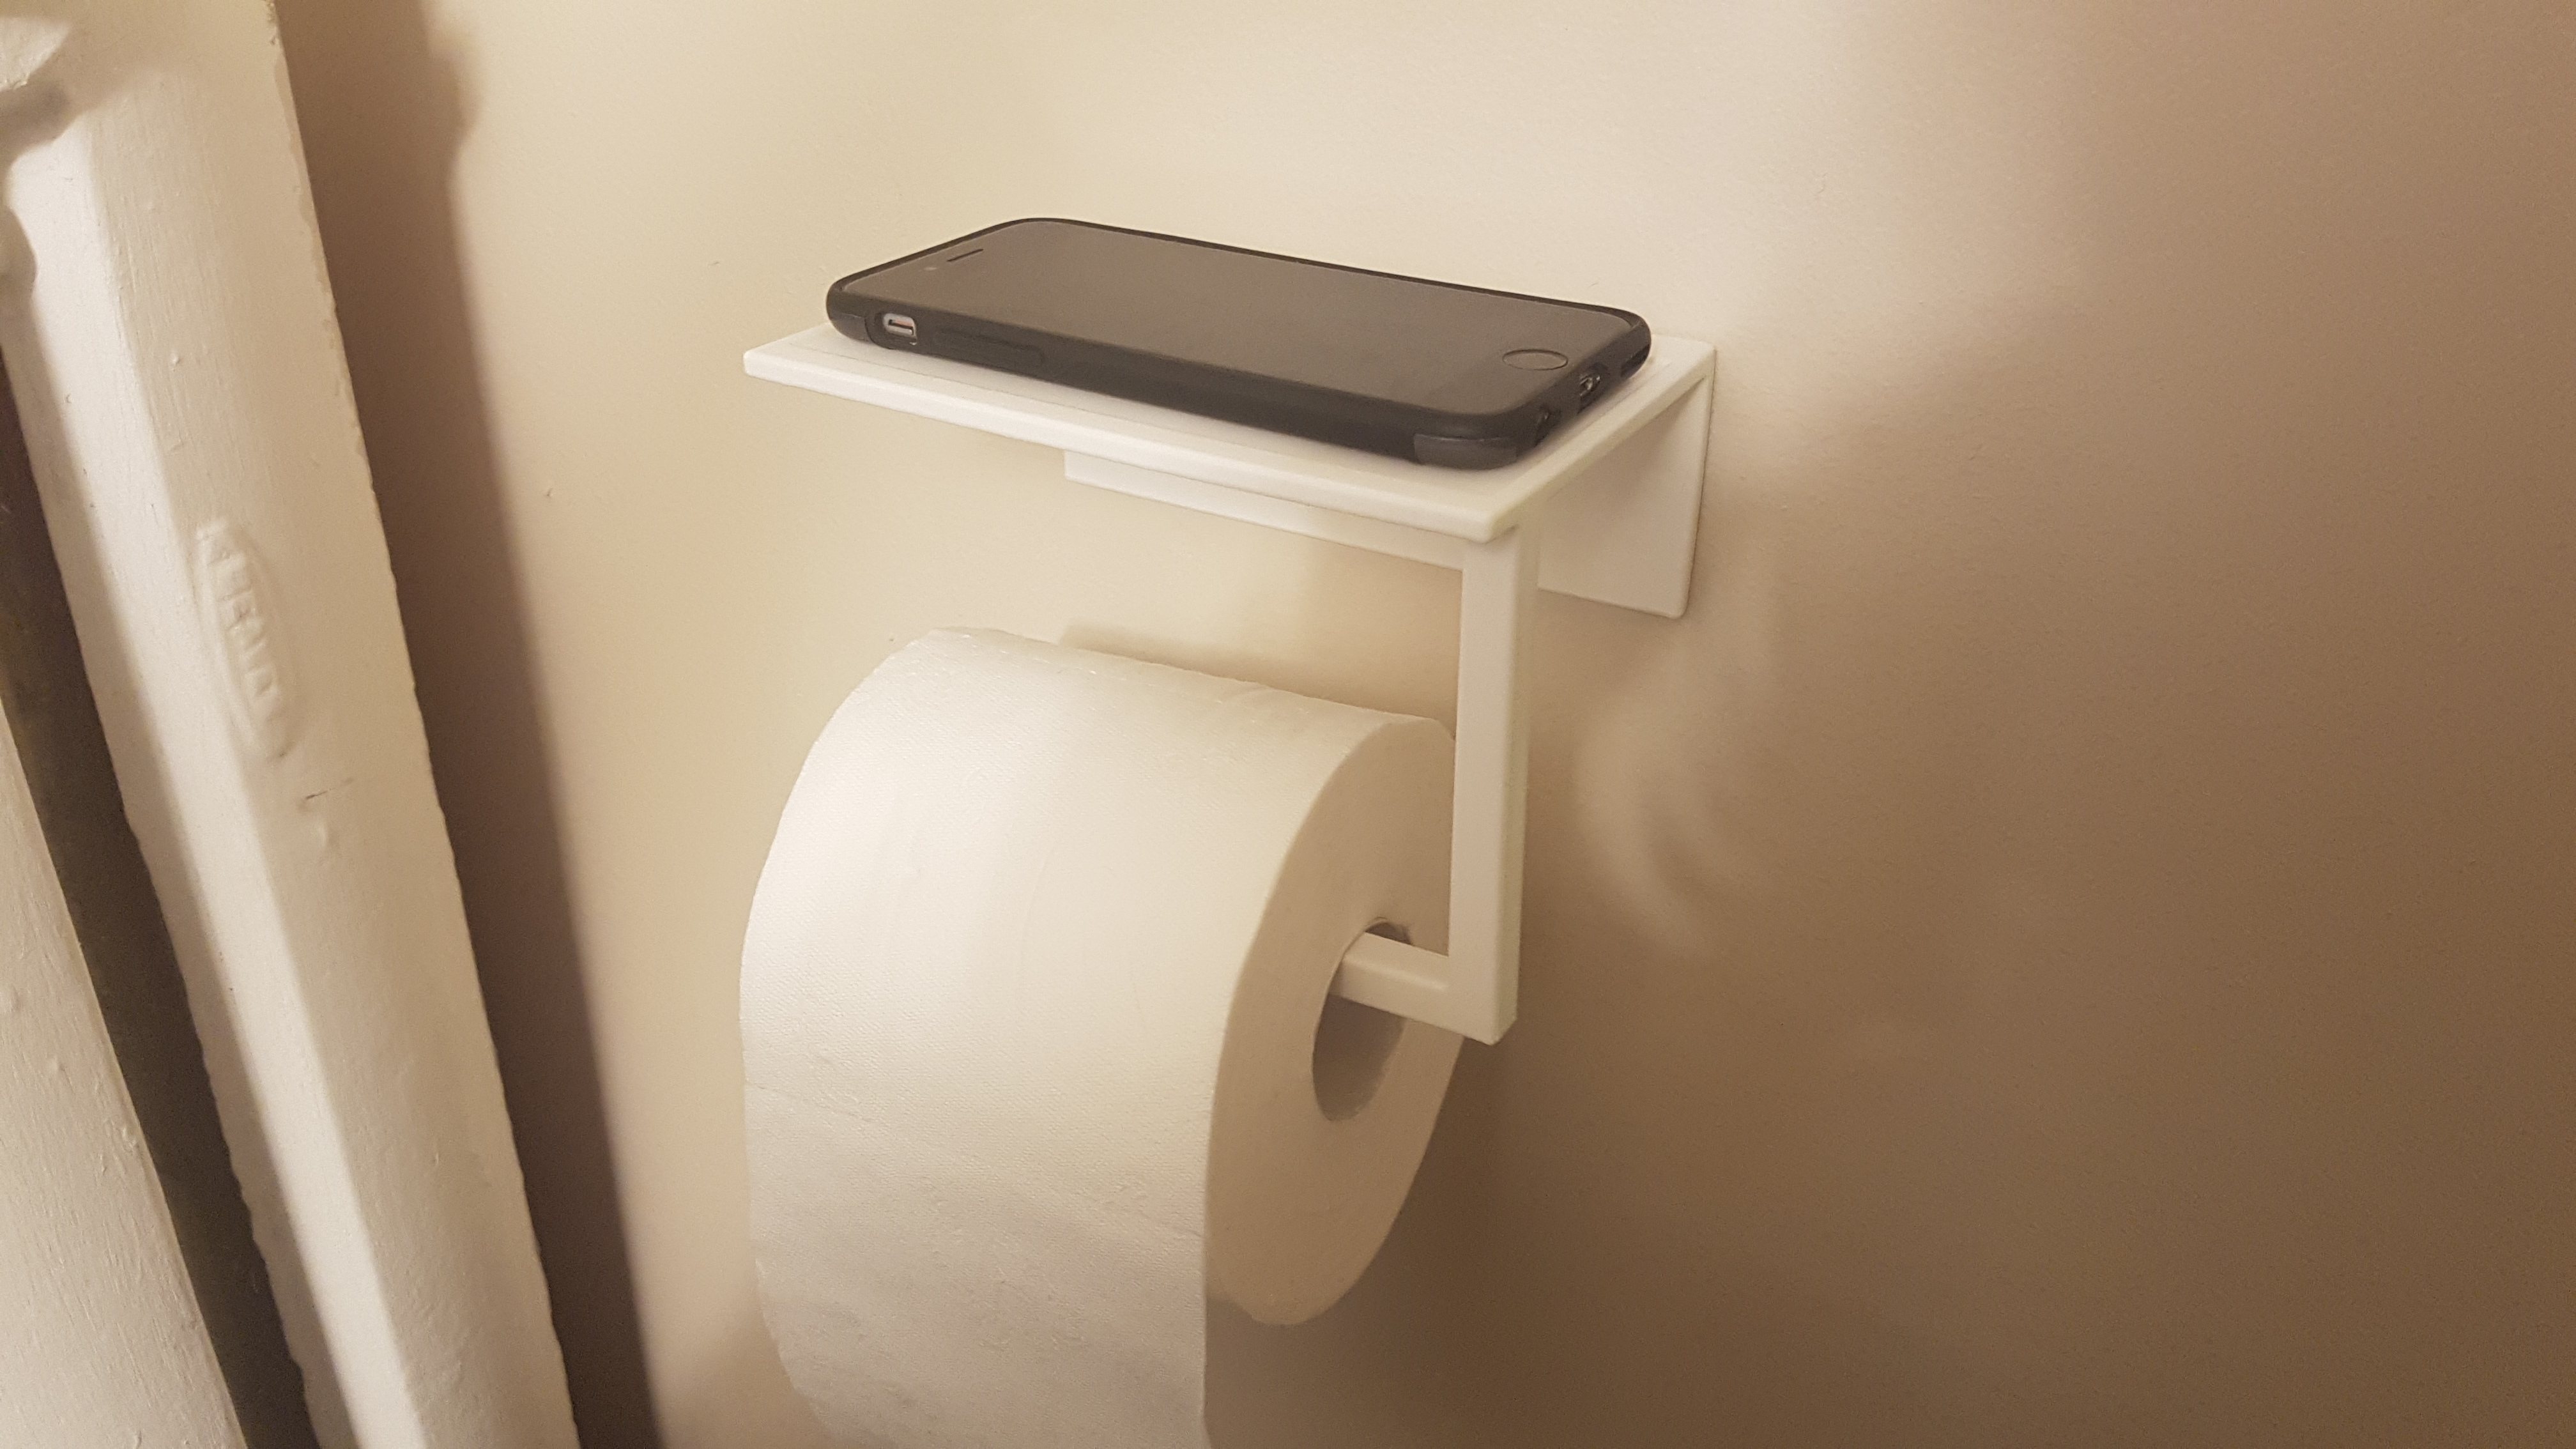 Toilet Paper Phone Holder